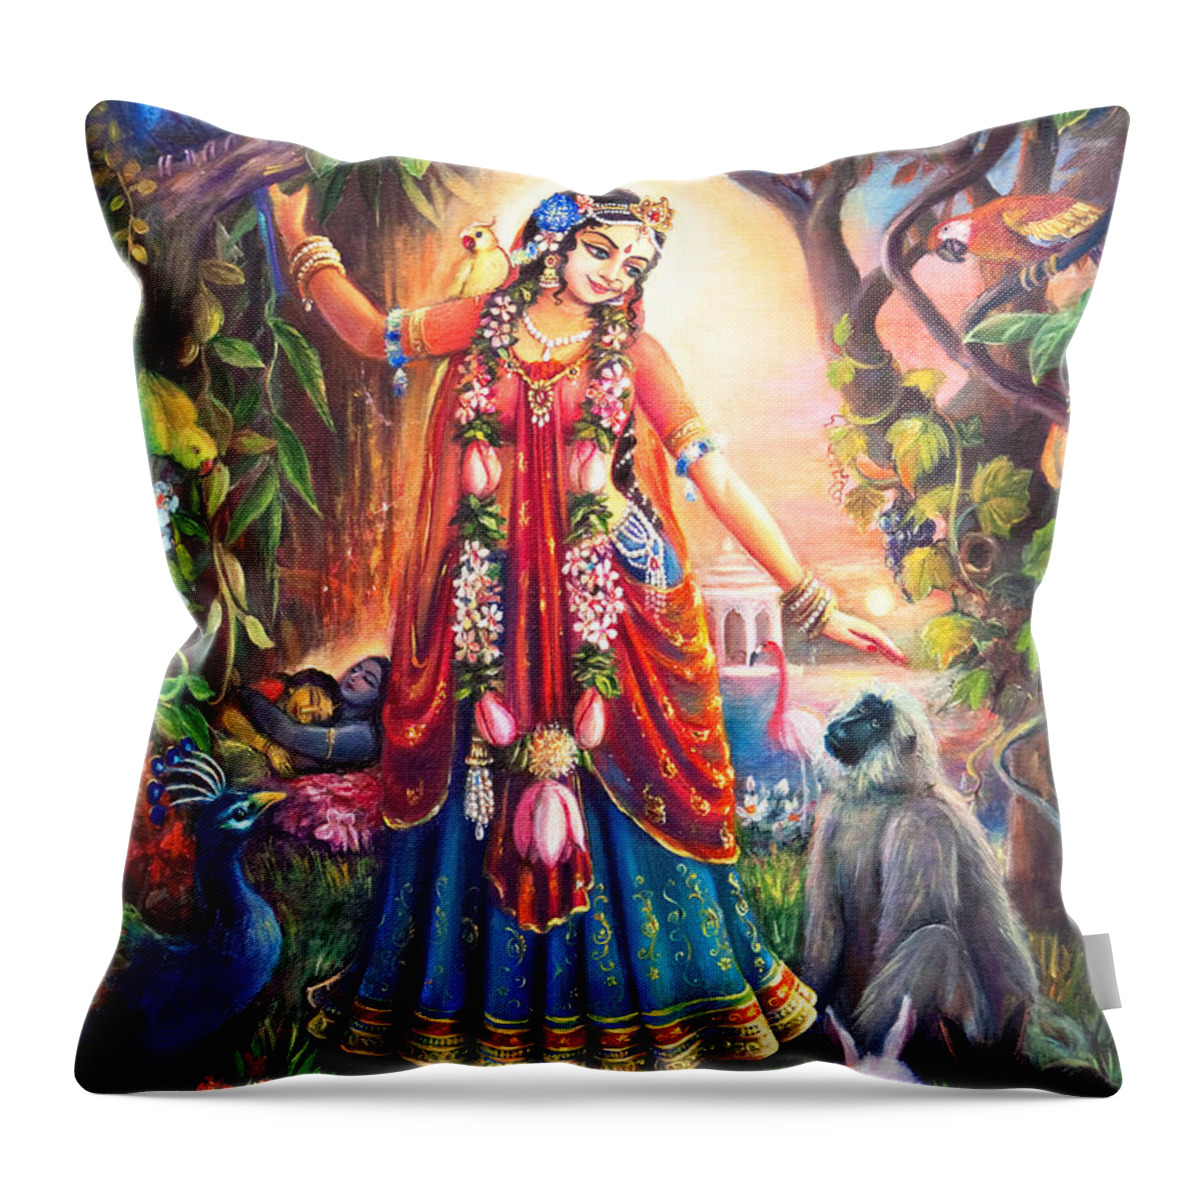 Radha-krishna Throw Pillow featuring the painting Vrinda devi by Lila Shravani